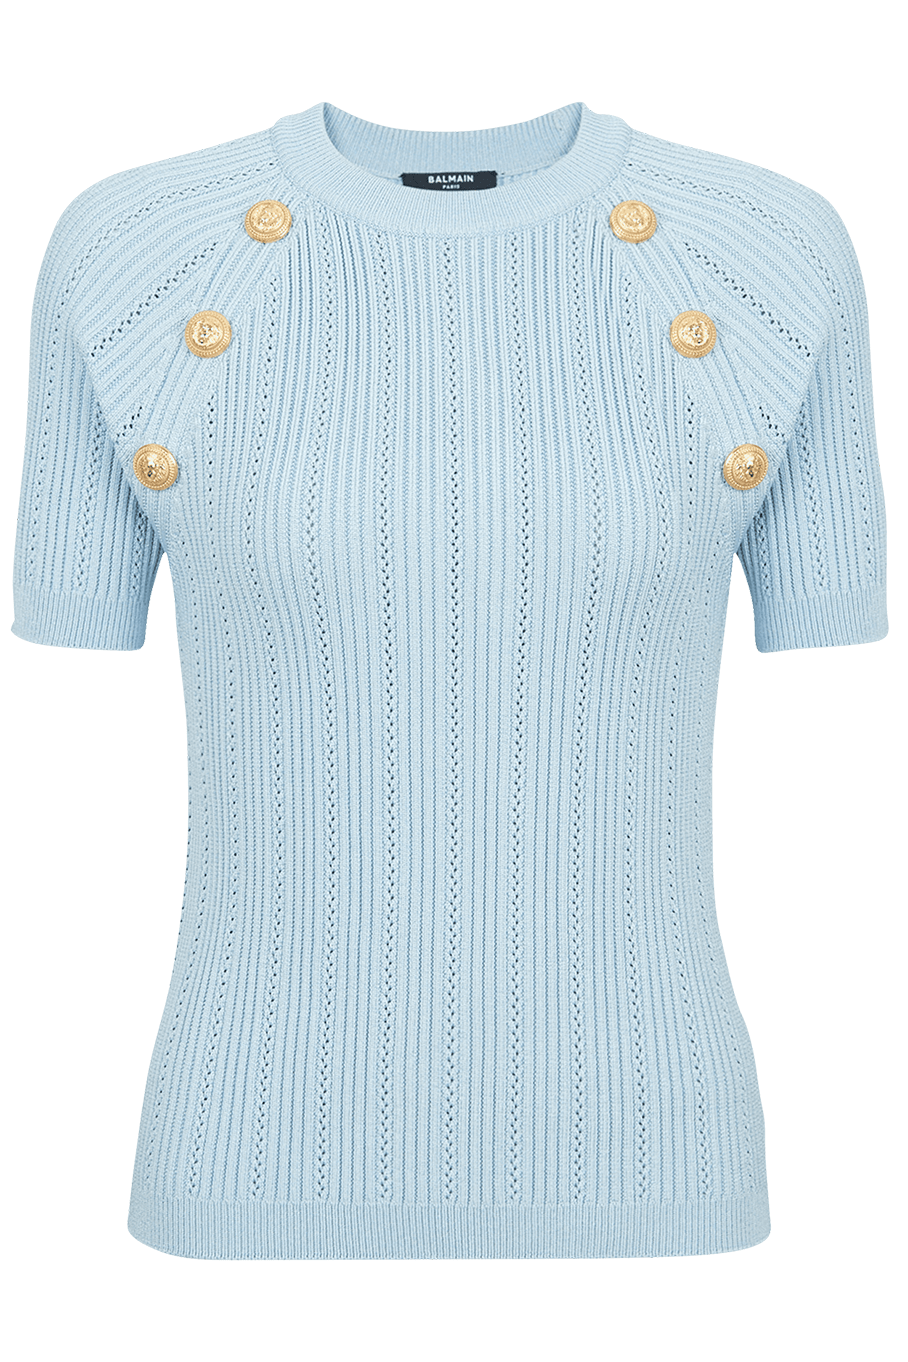 Short Sleeve 6 Button Knit Top - Bleu CLOTHINGTOPKNITS BALMAIN   